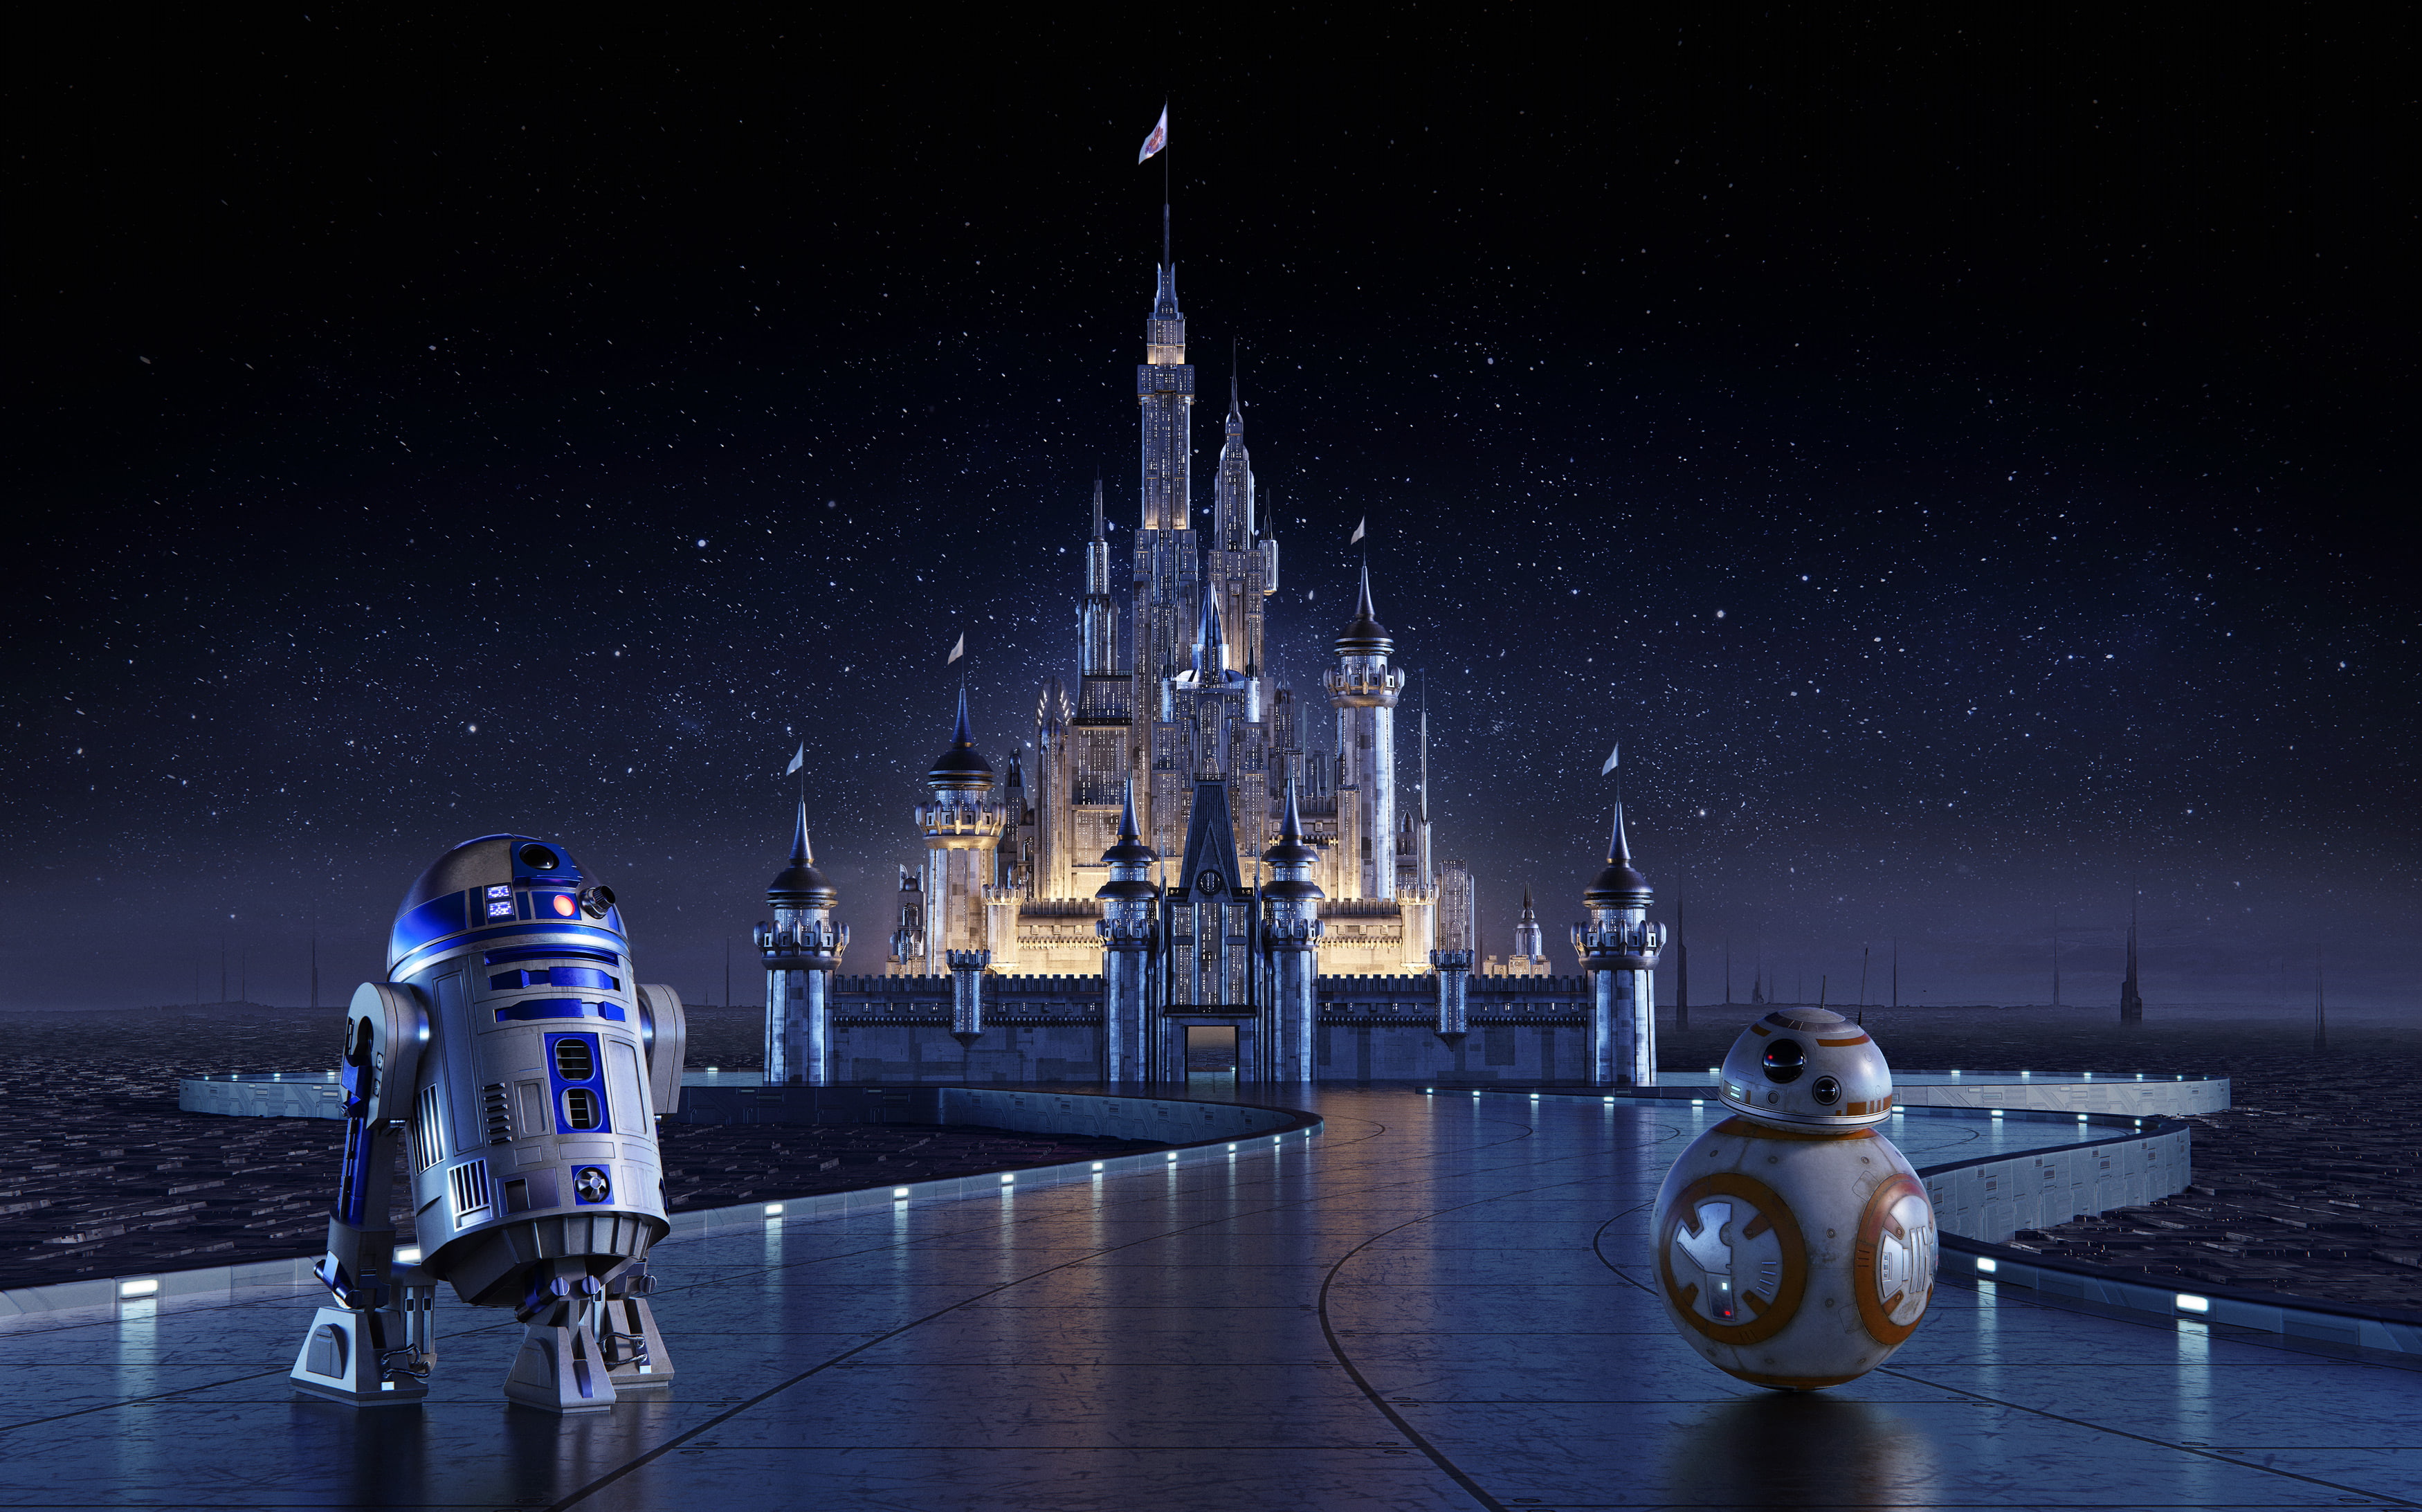 Free Download Hd Wallpaper Disney Castle R2 D2 Bb 8 Star